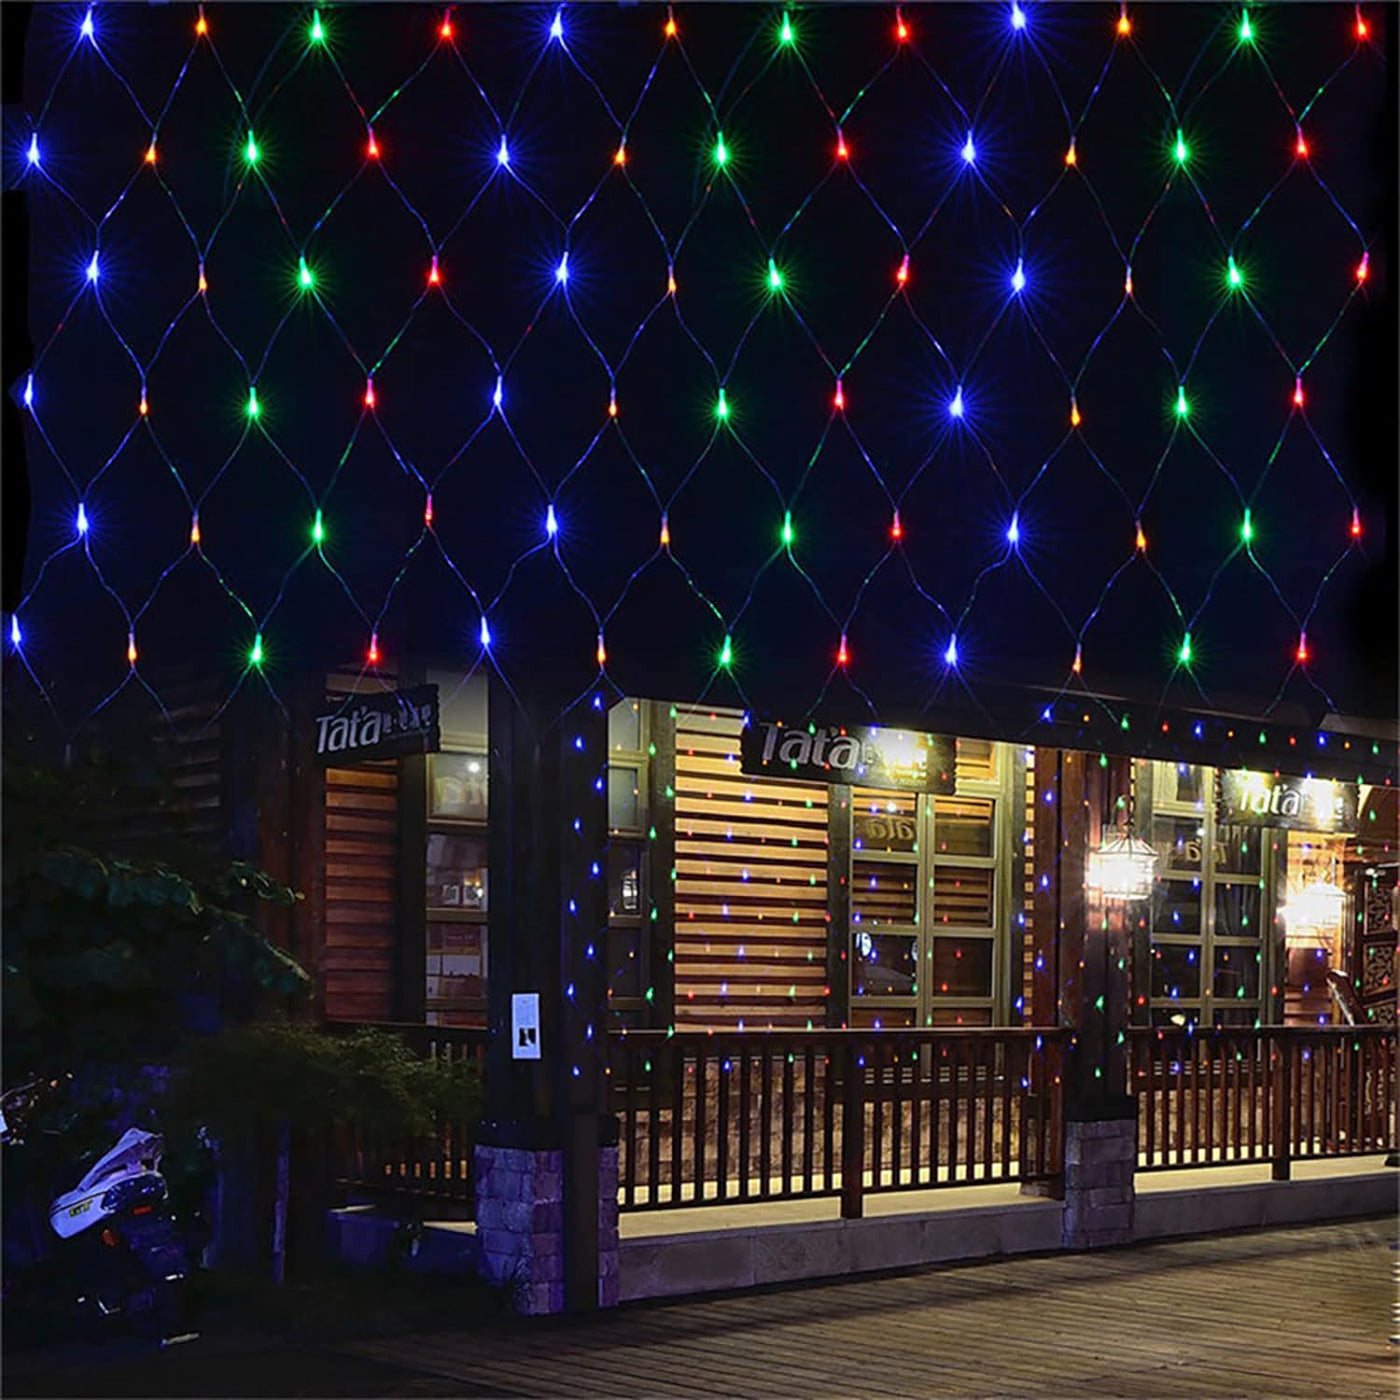 DecorTwist Net/Mesh Fountain Rice Light for Wall Decor| Home Decoration| Diwali Item| Christmas Item| Indoor & Outdoor Decoration Item| | Festival Item | 3 MTR |192 LED Bulb (Multi)